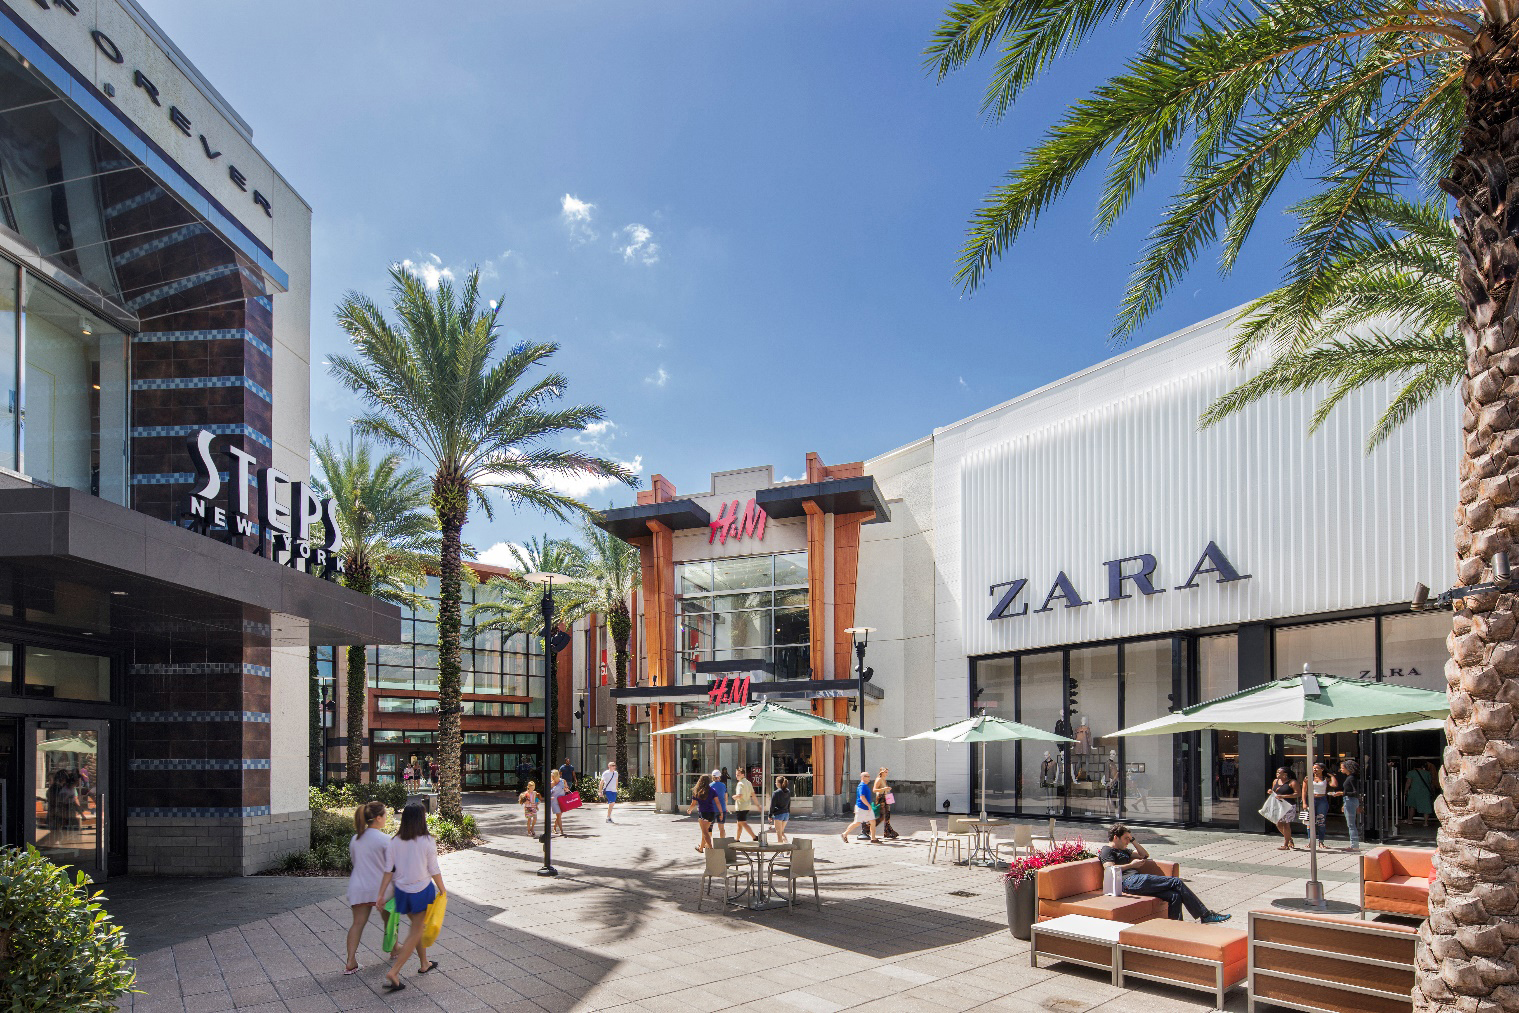 Top 10 Shopping Malls to Visit in Orlando, Florida